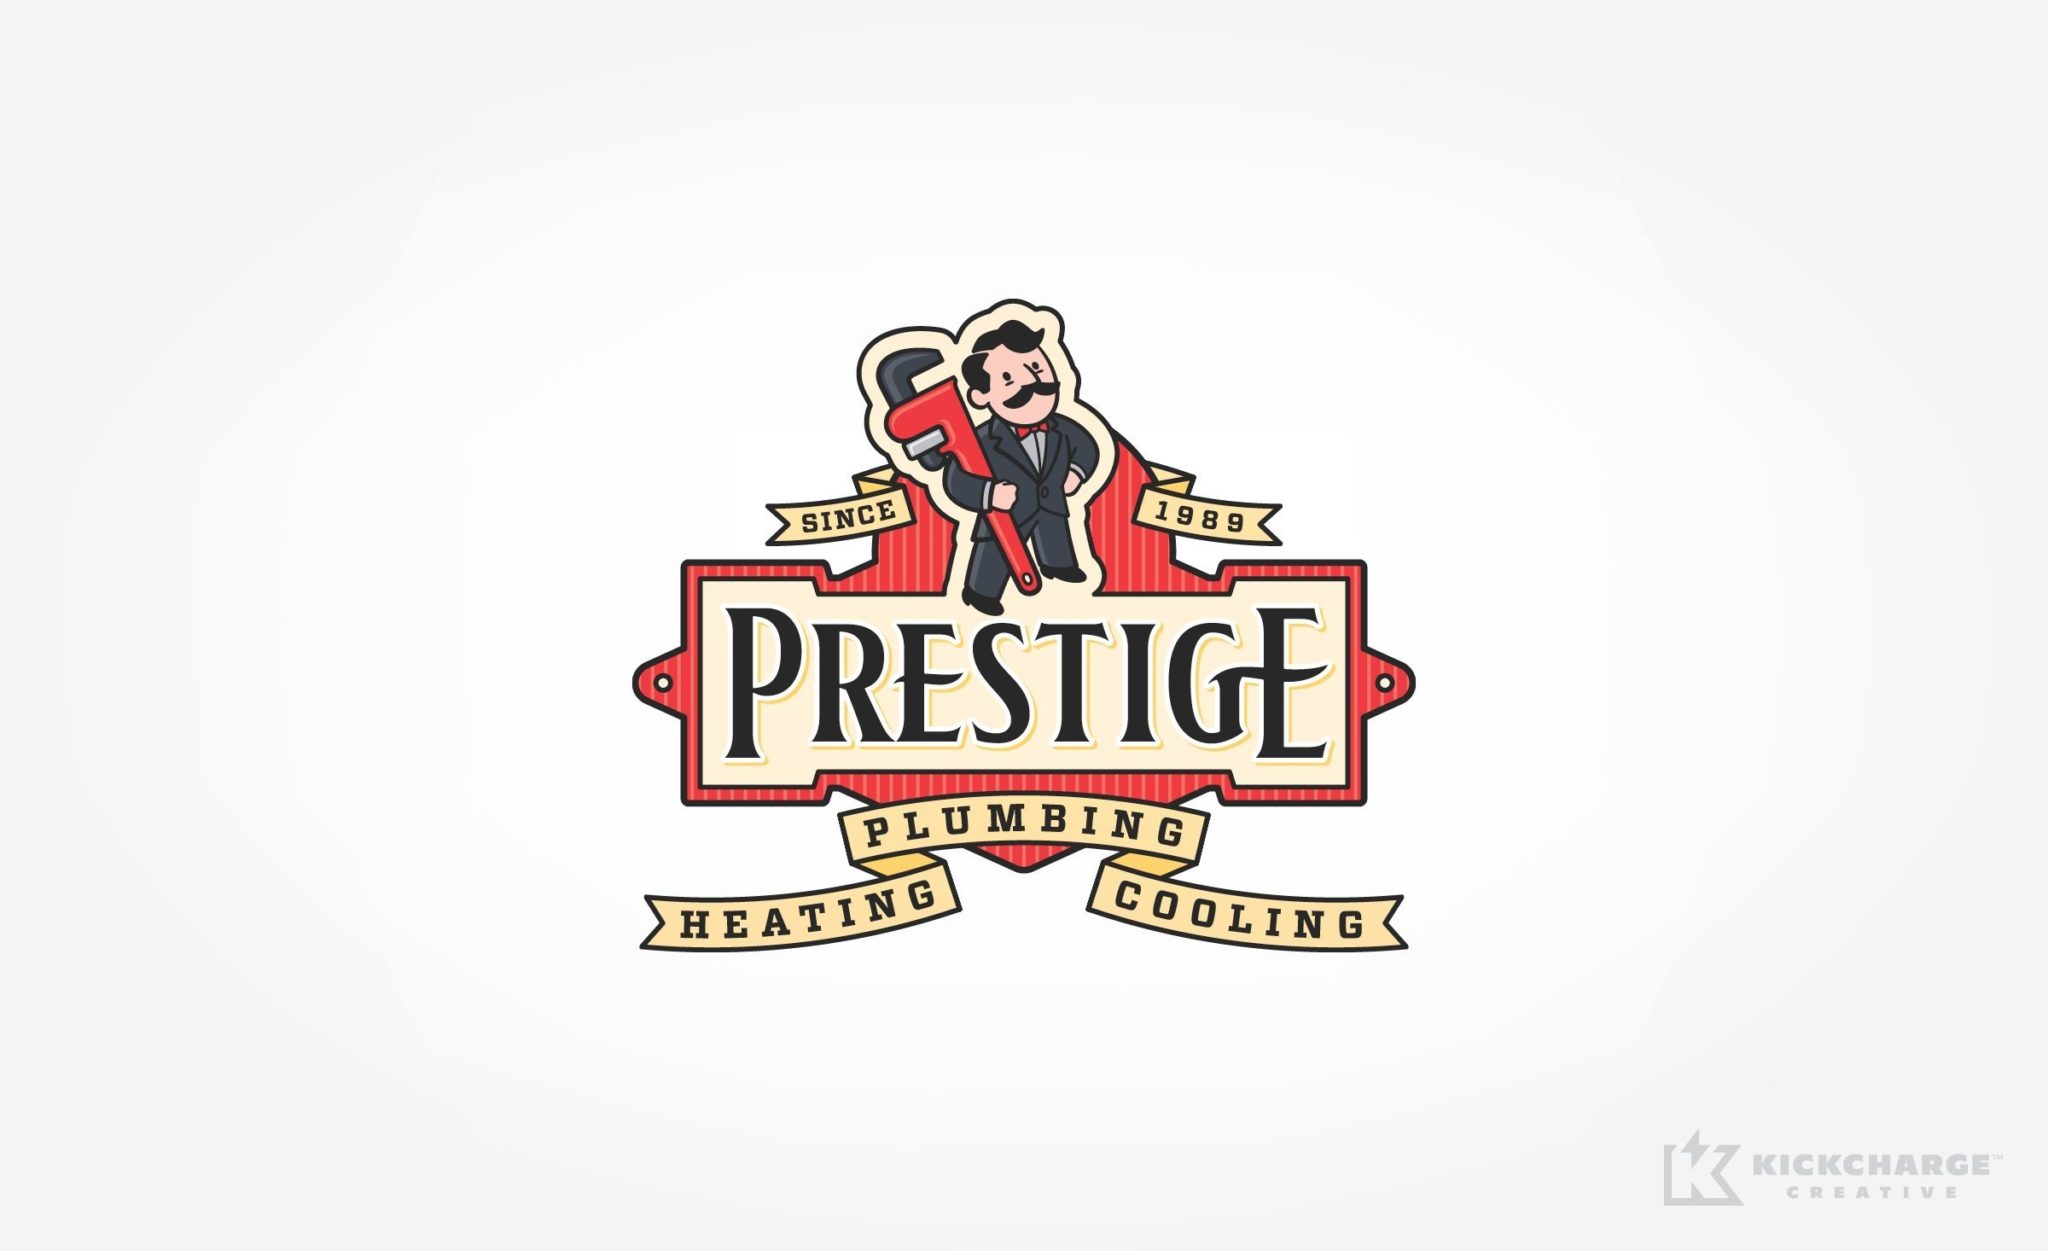 Prestige Plumbing, Heating & Cooling